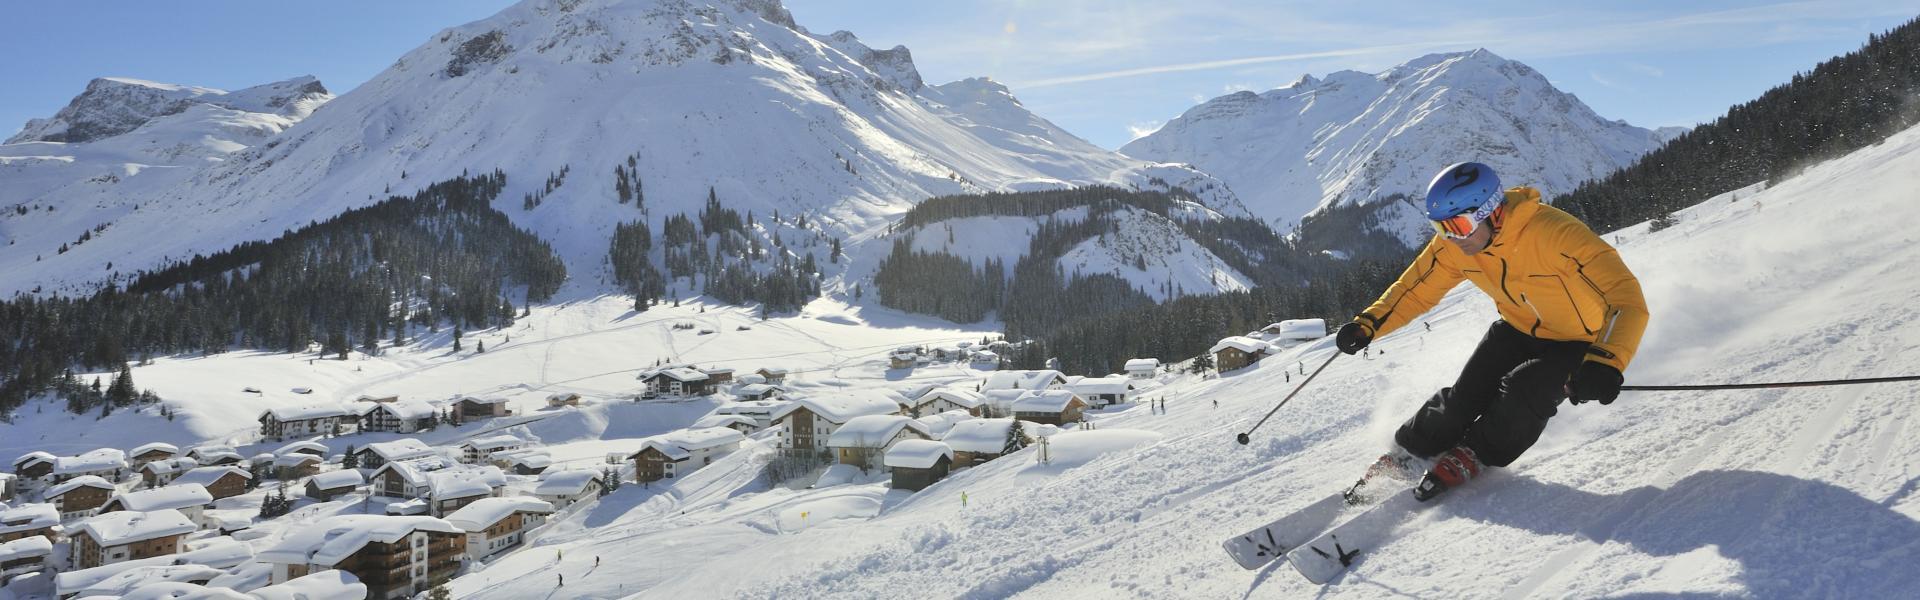 Skigebiet Lech Zürs